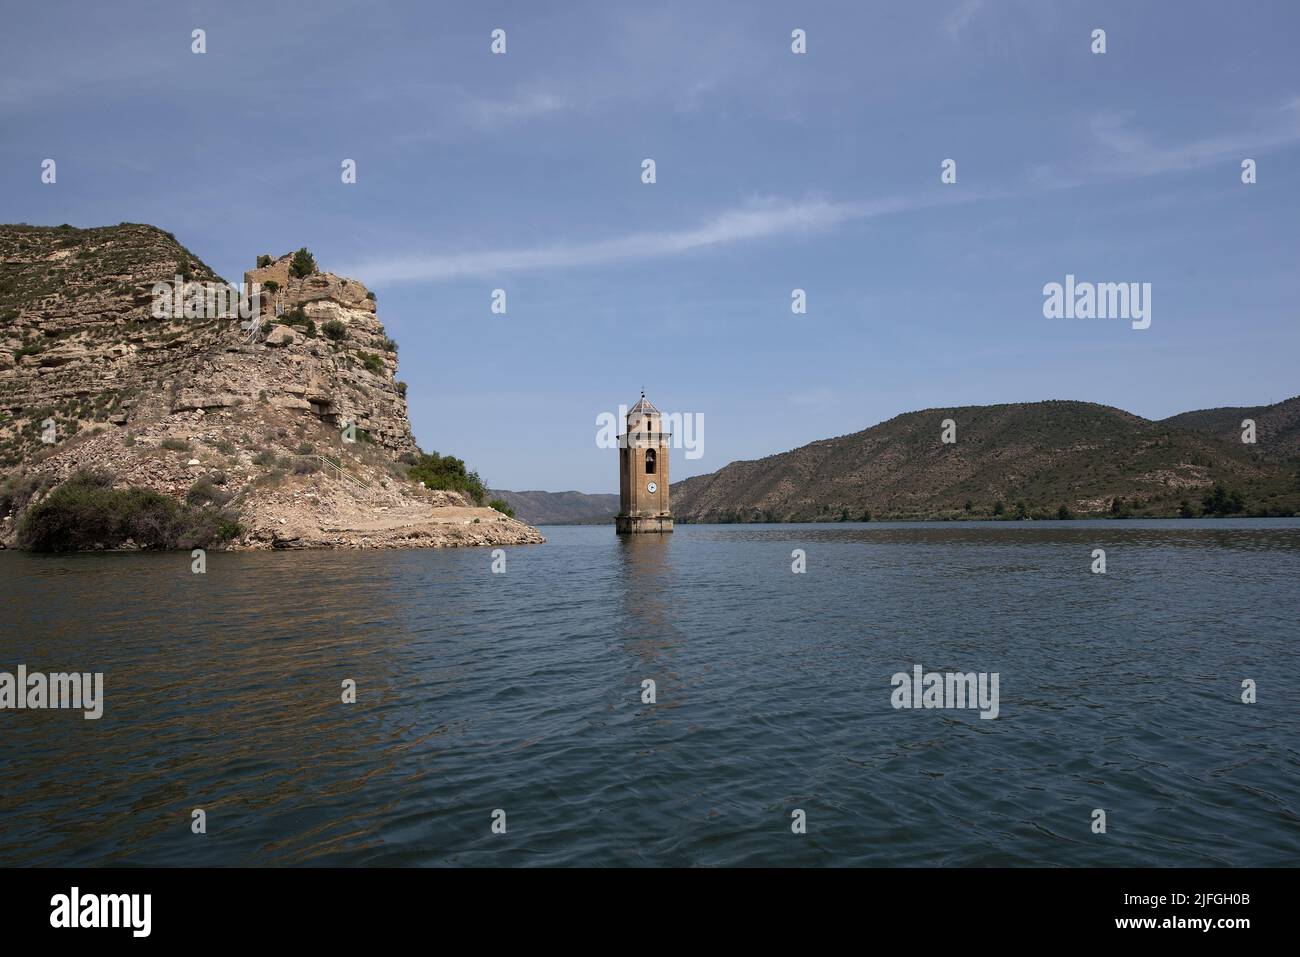 Tower of the Church of San Juan Evangelista in the Ribarroja reservoir, Aragon, Spain Stock Photo